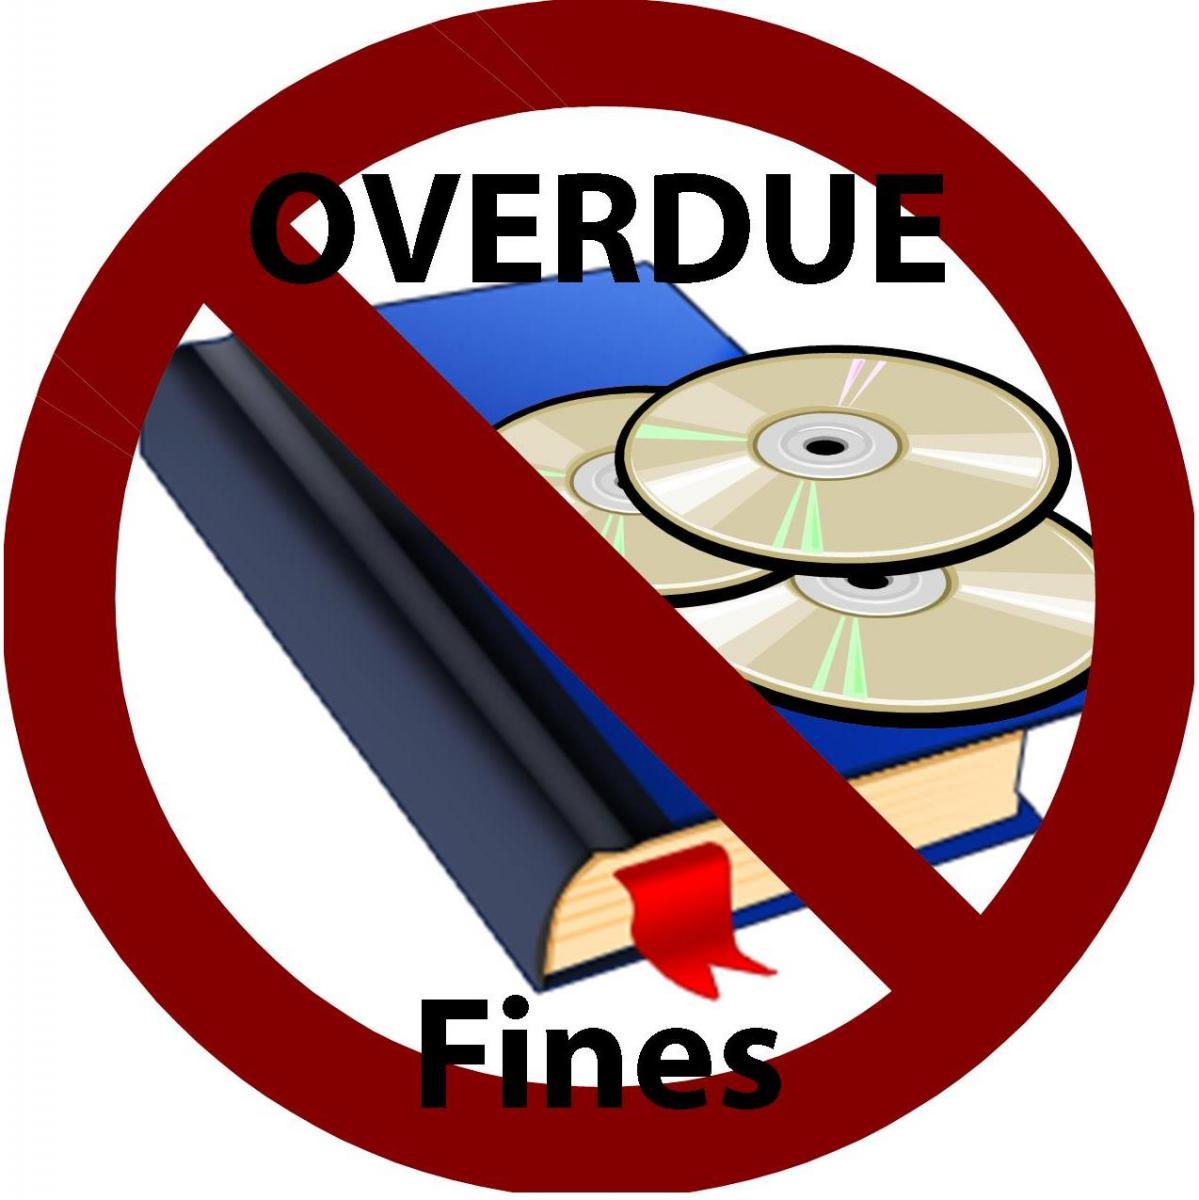 No Overdue Fines.jpg